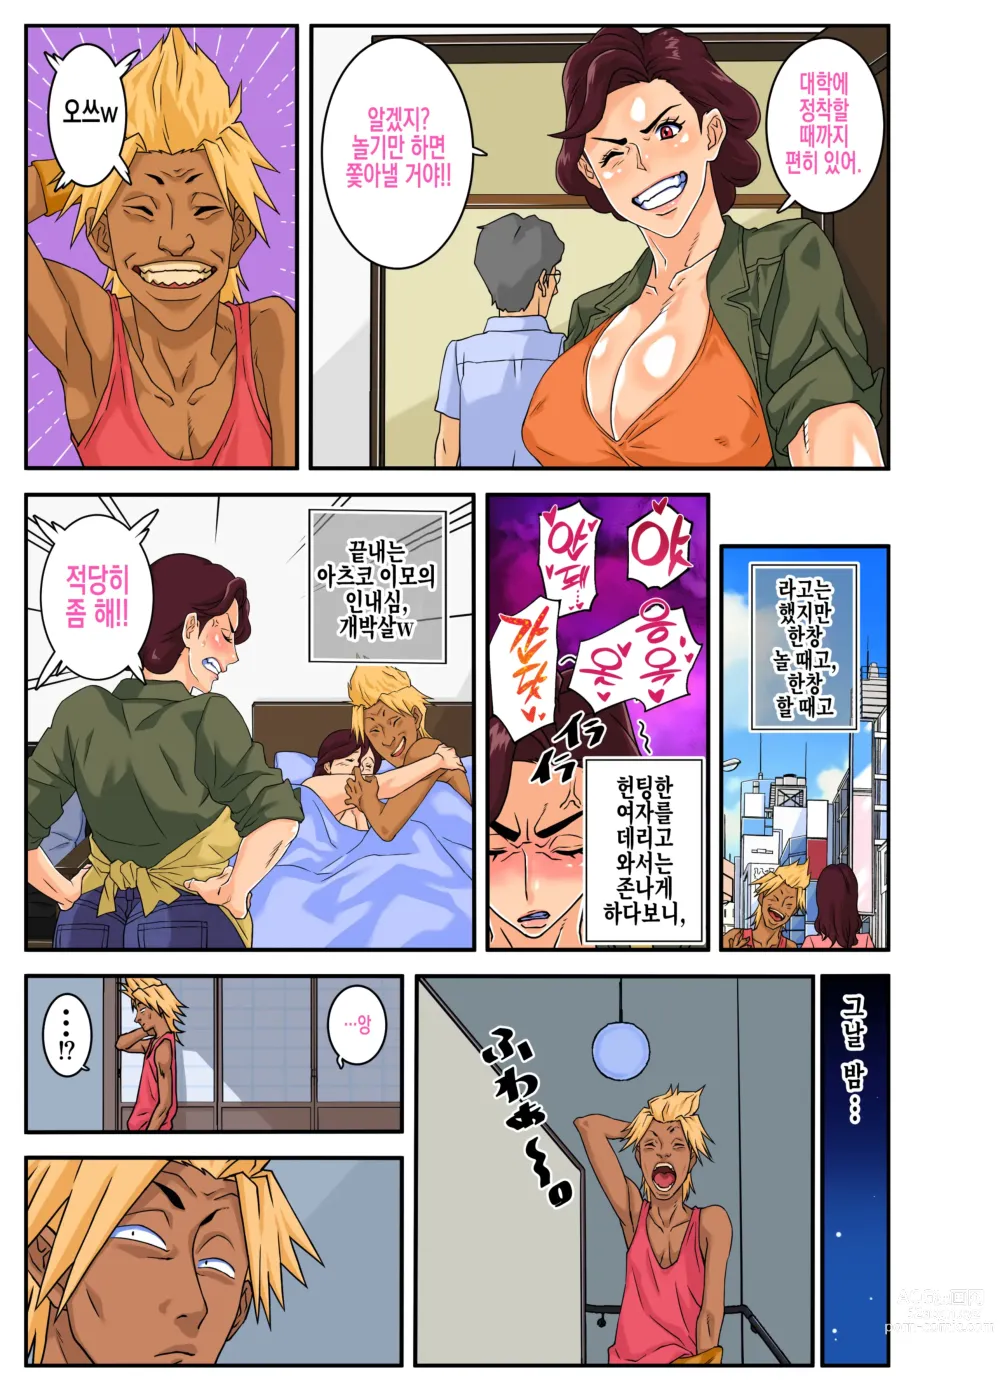 Page 6 of doujinshi 이모 따먹기.